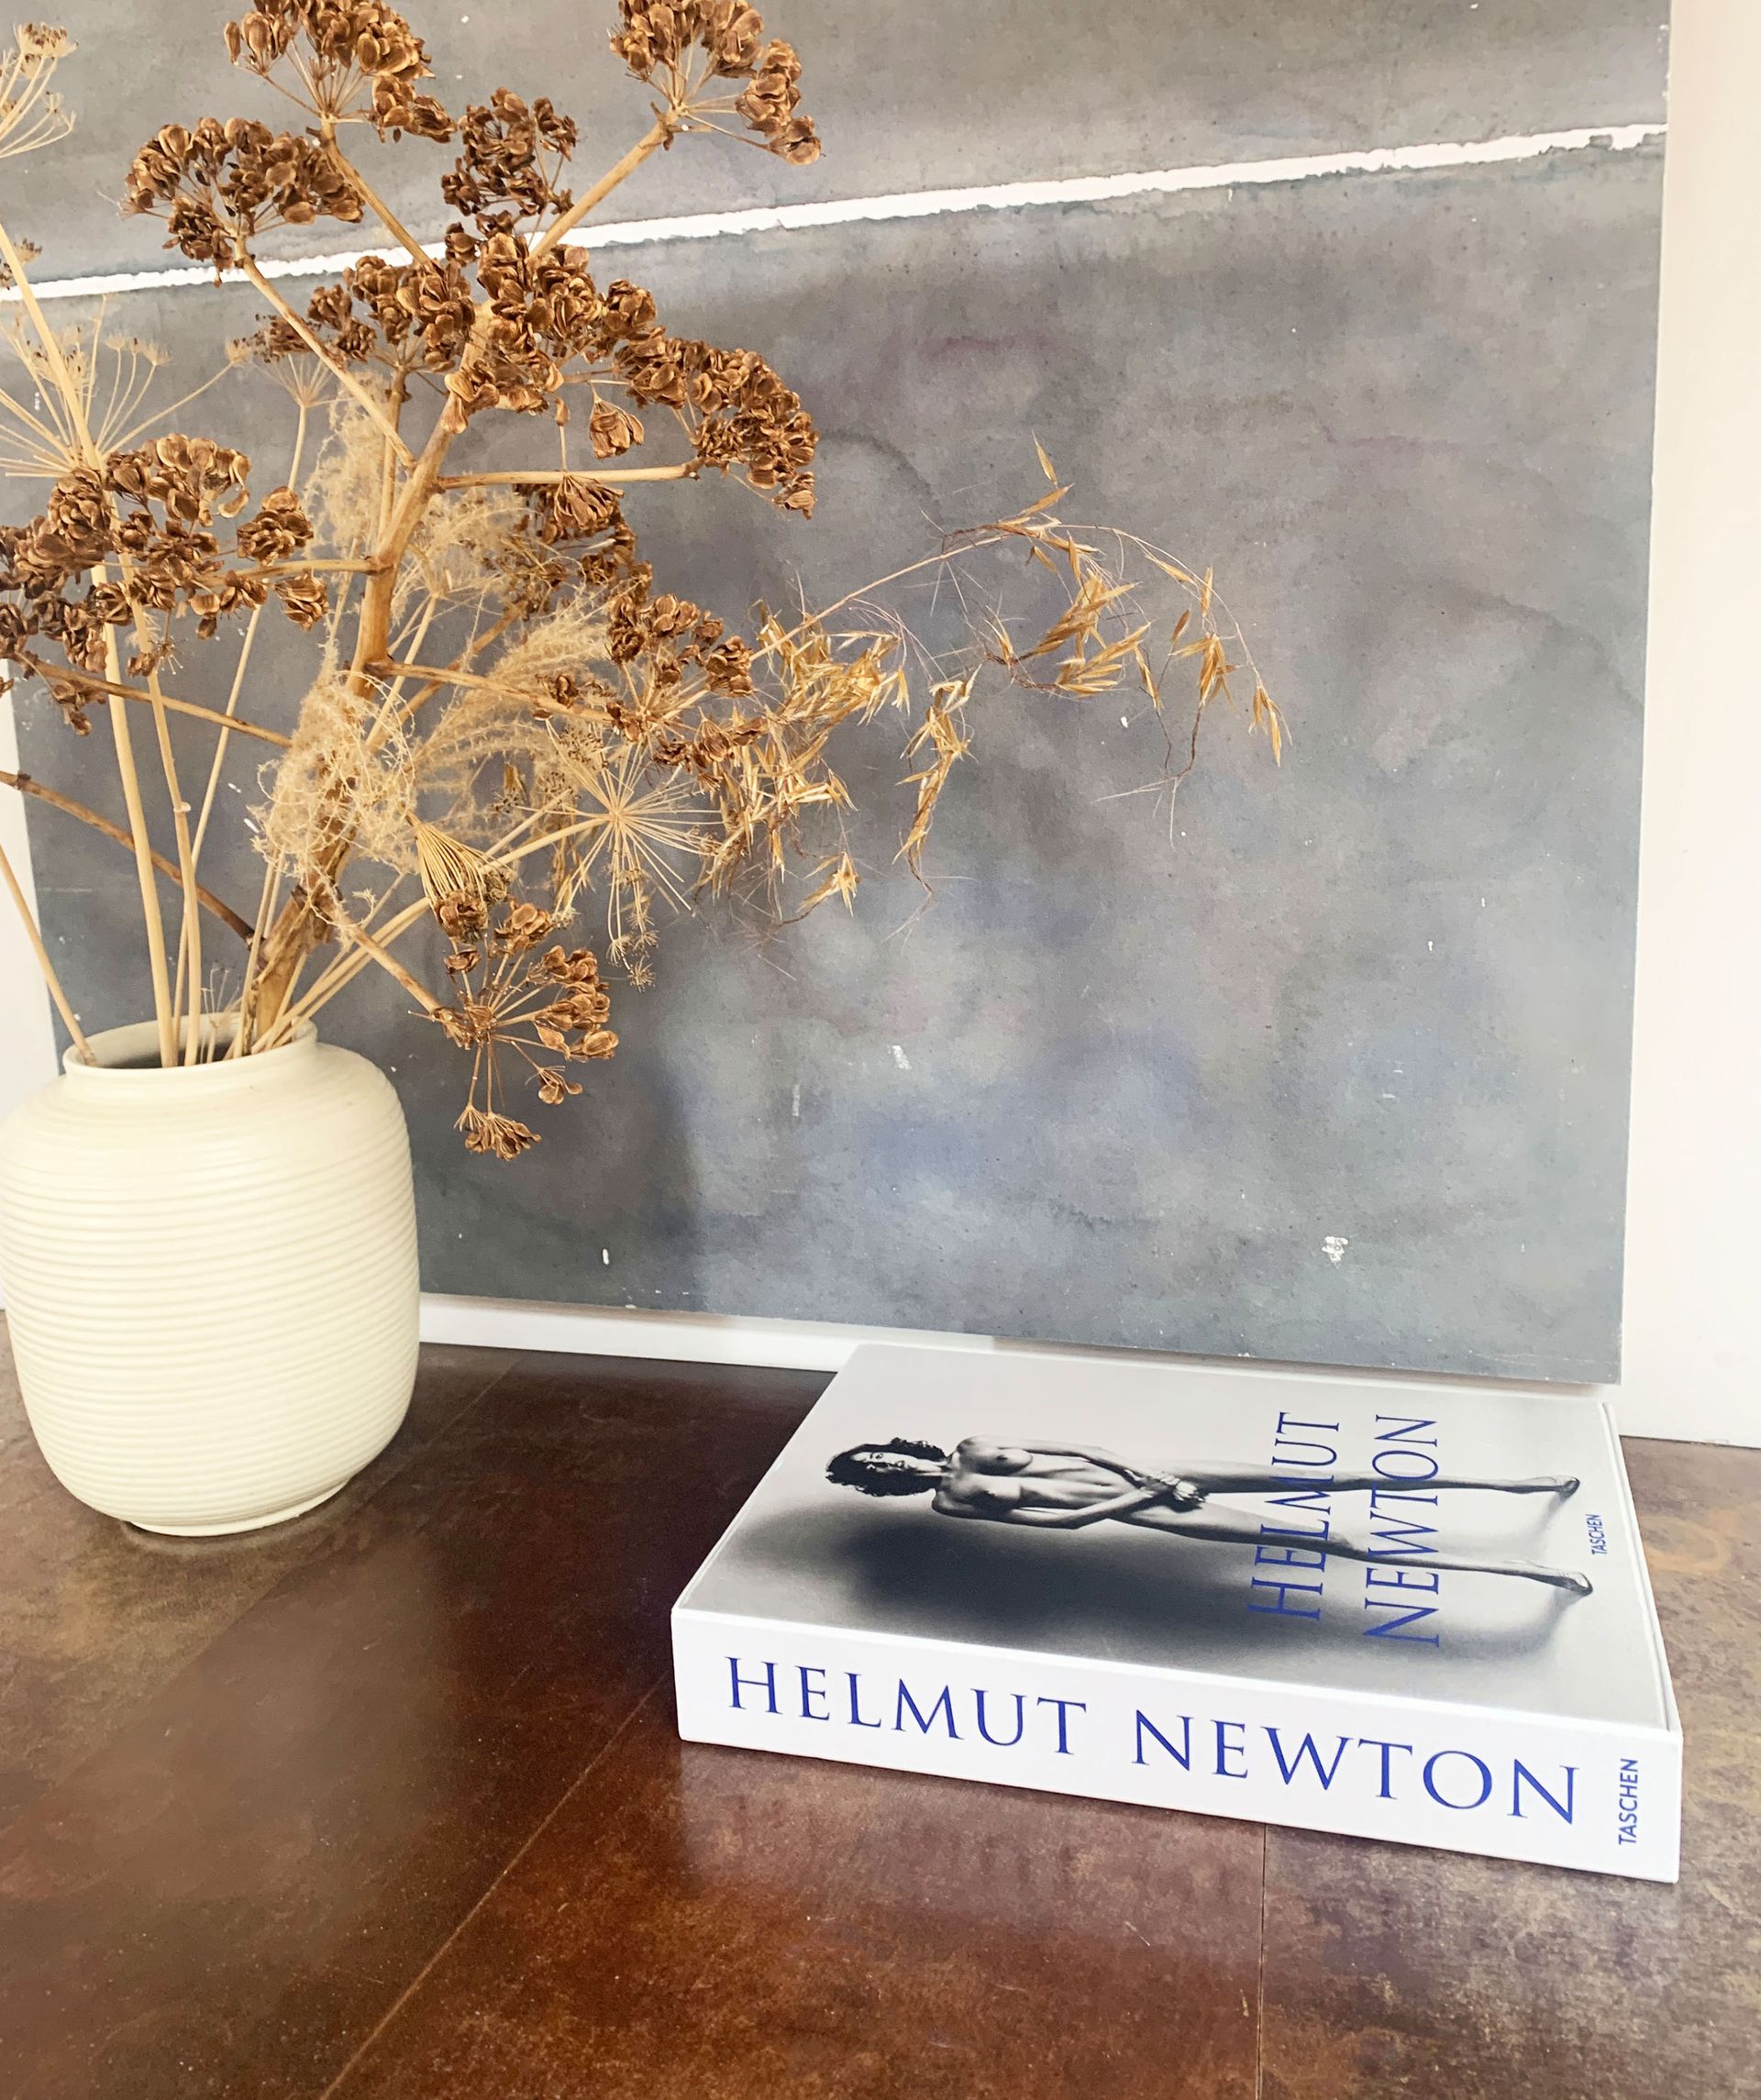 Helmut Newton coffee table book